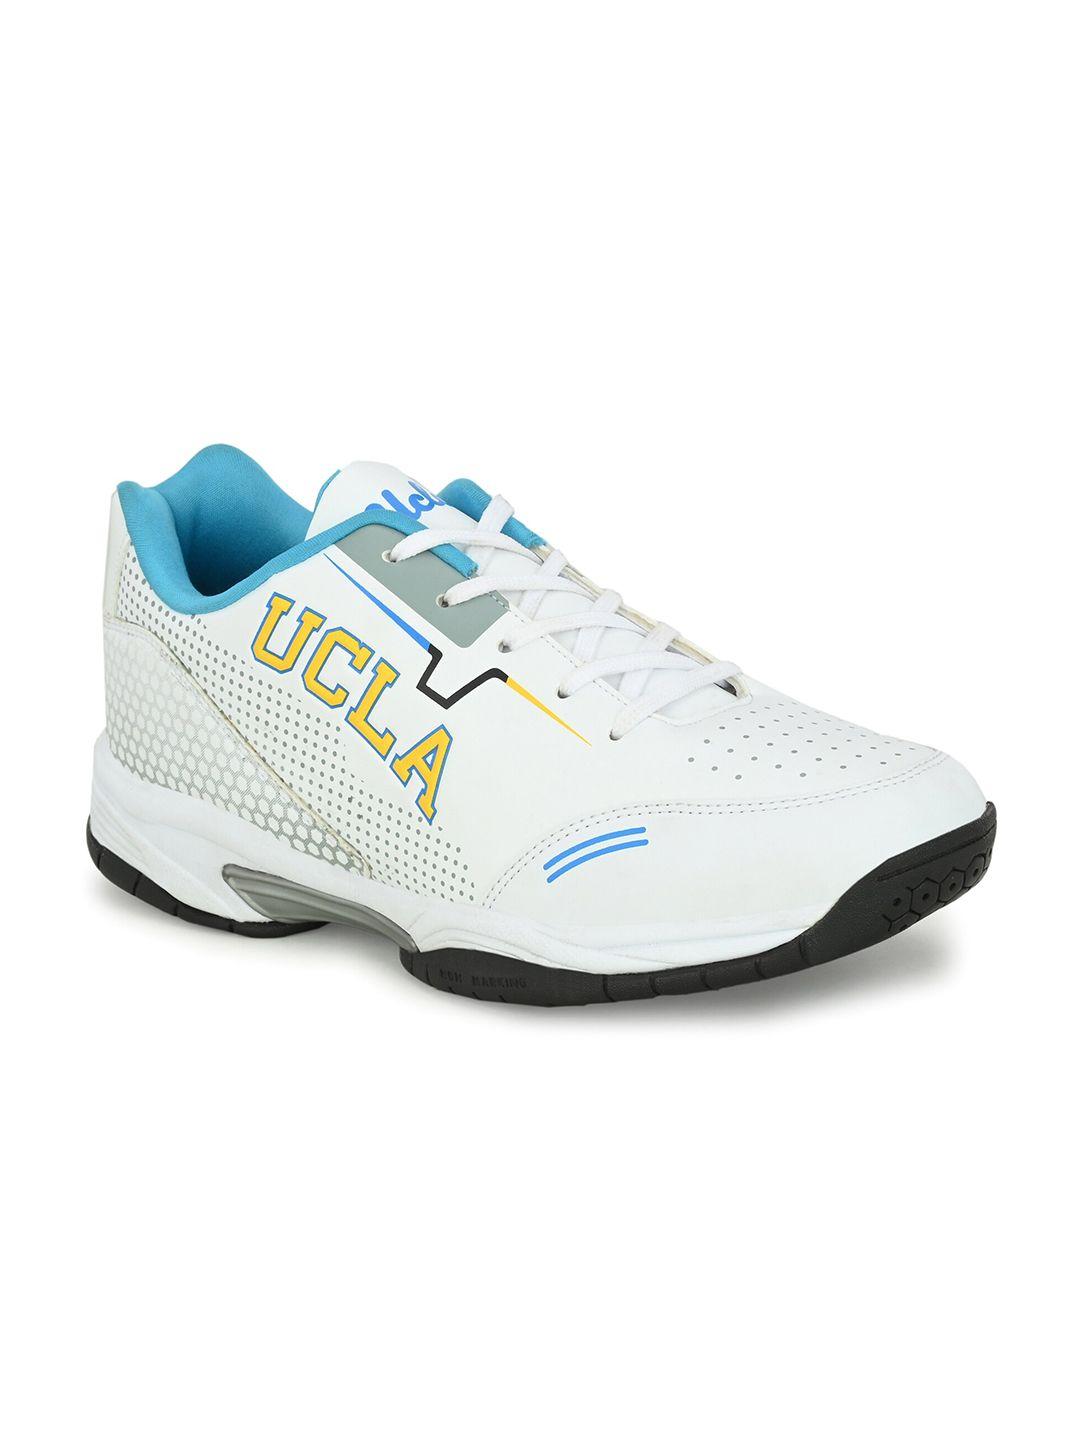 ucla men white non-marking tennis sports shoes